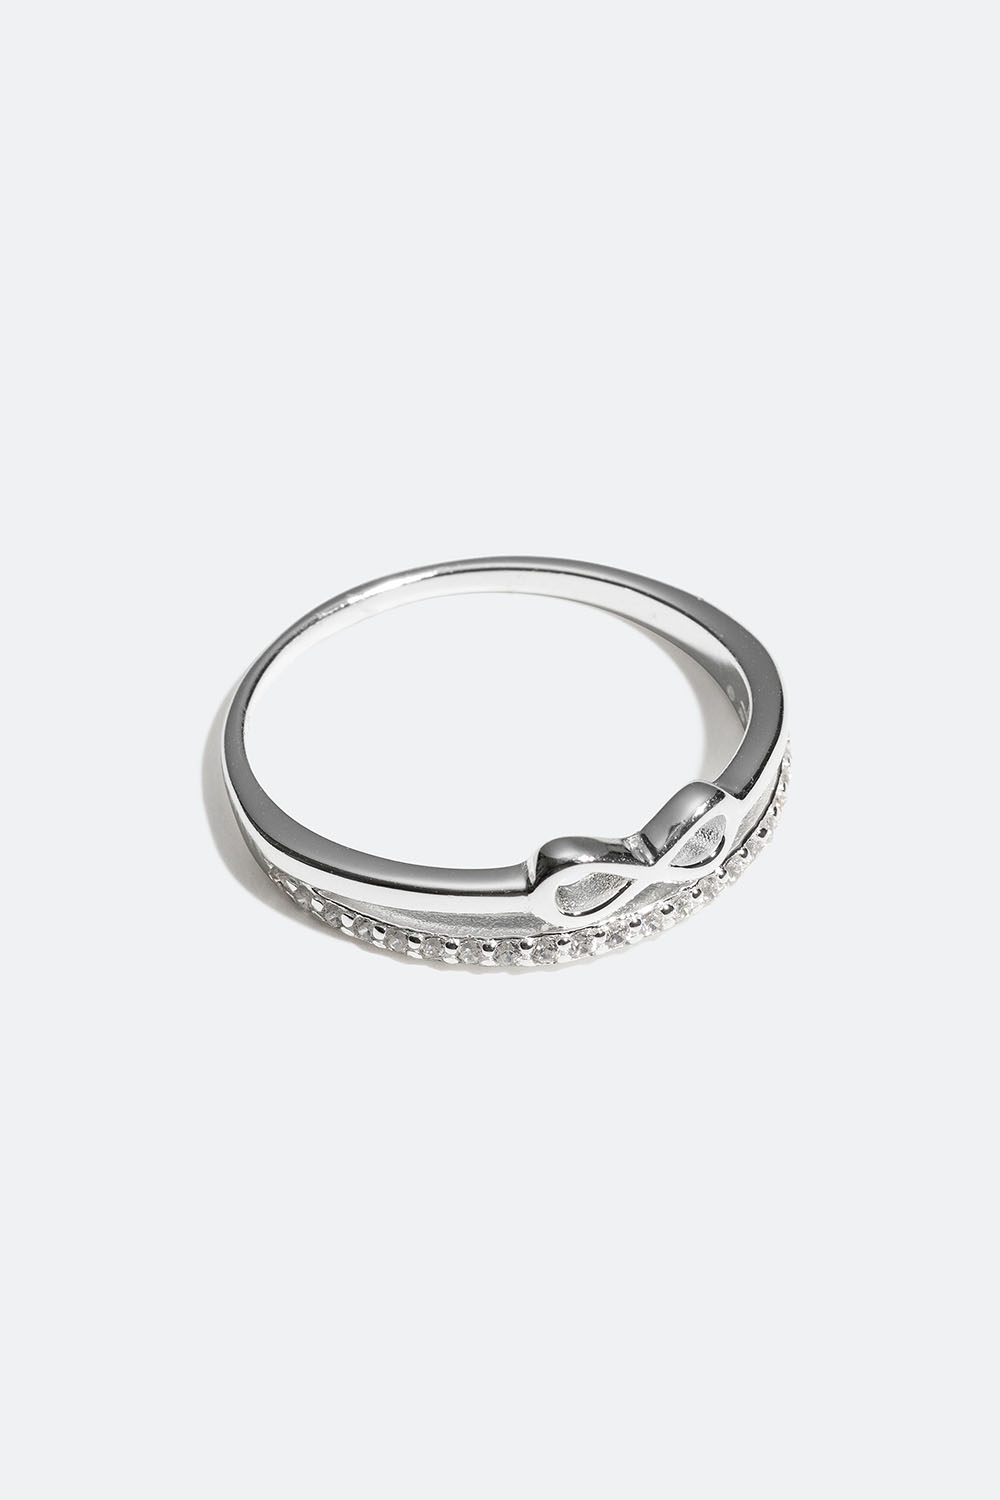 Ring i ægte sølv med infinity-symbol i gruppen Ægte sølv / Sølvringe / Sølv hos Glitter (55600070)